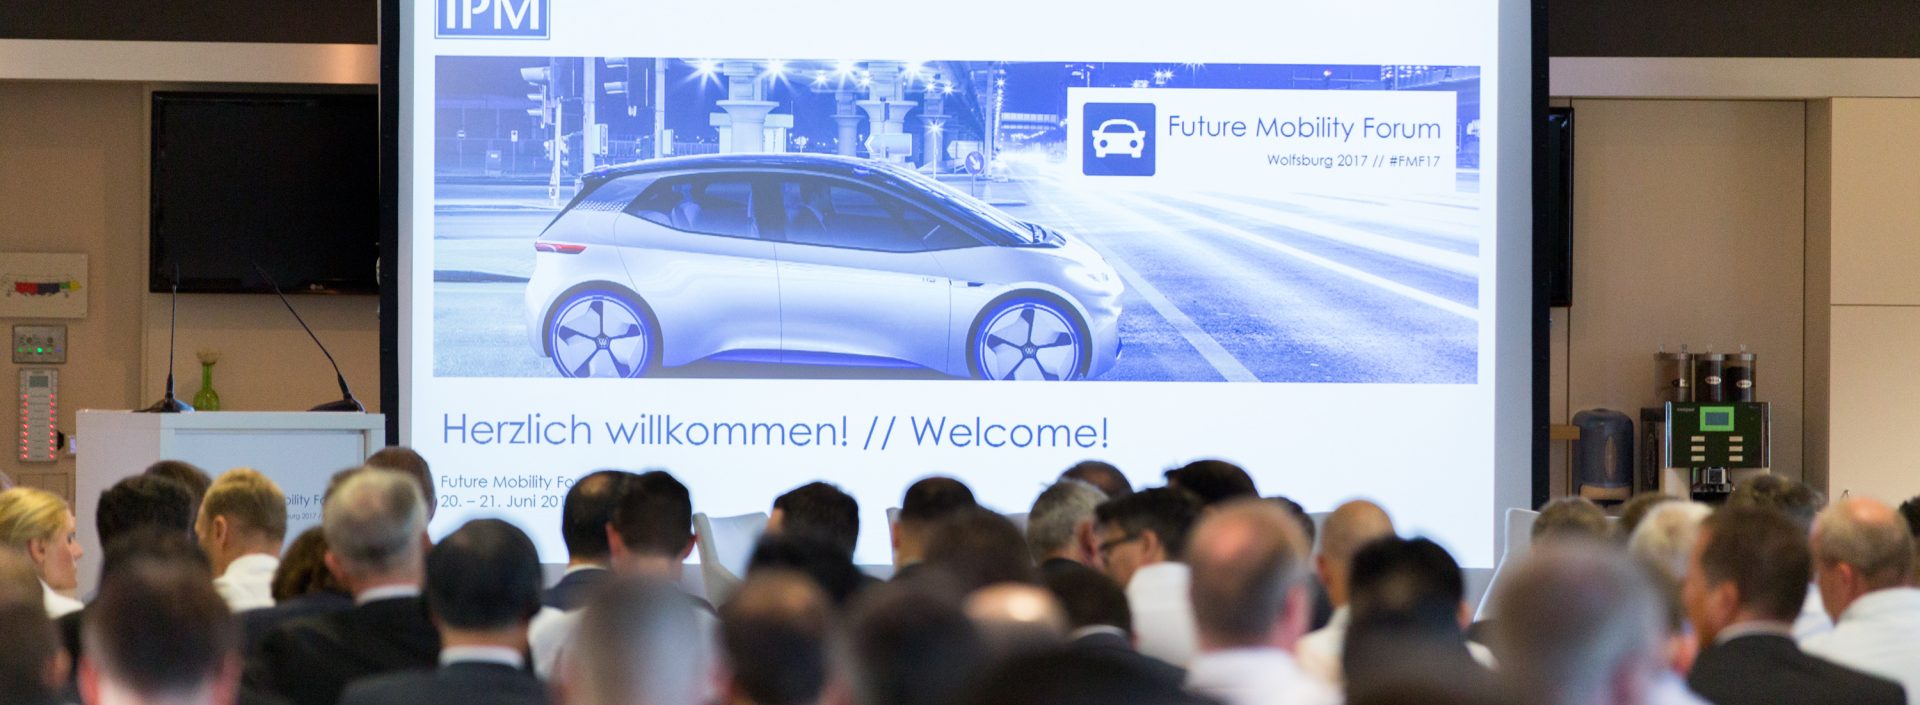 Volkswagen - Future Mobility Forum 2017 © offenblende.de